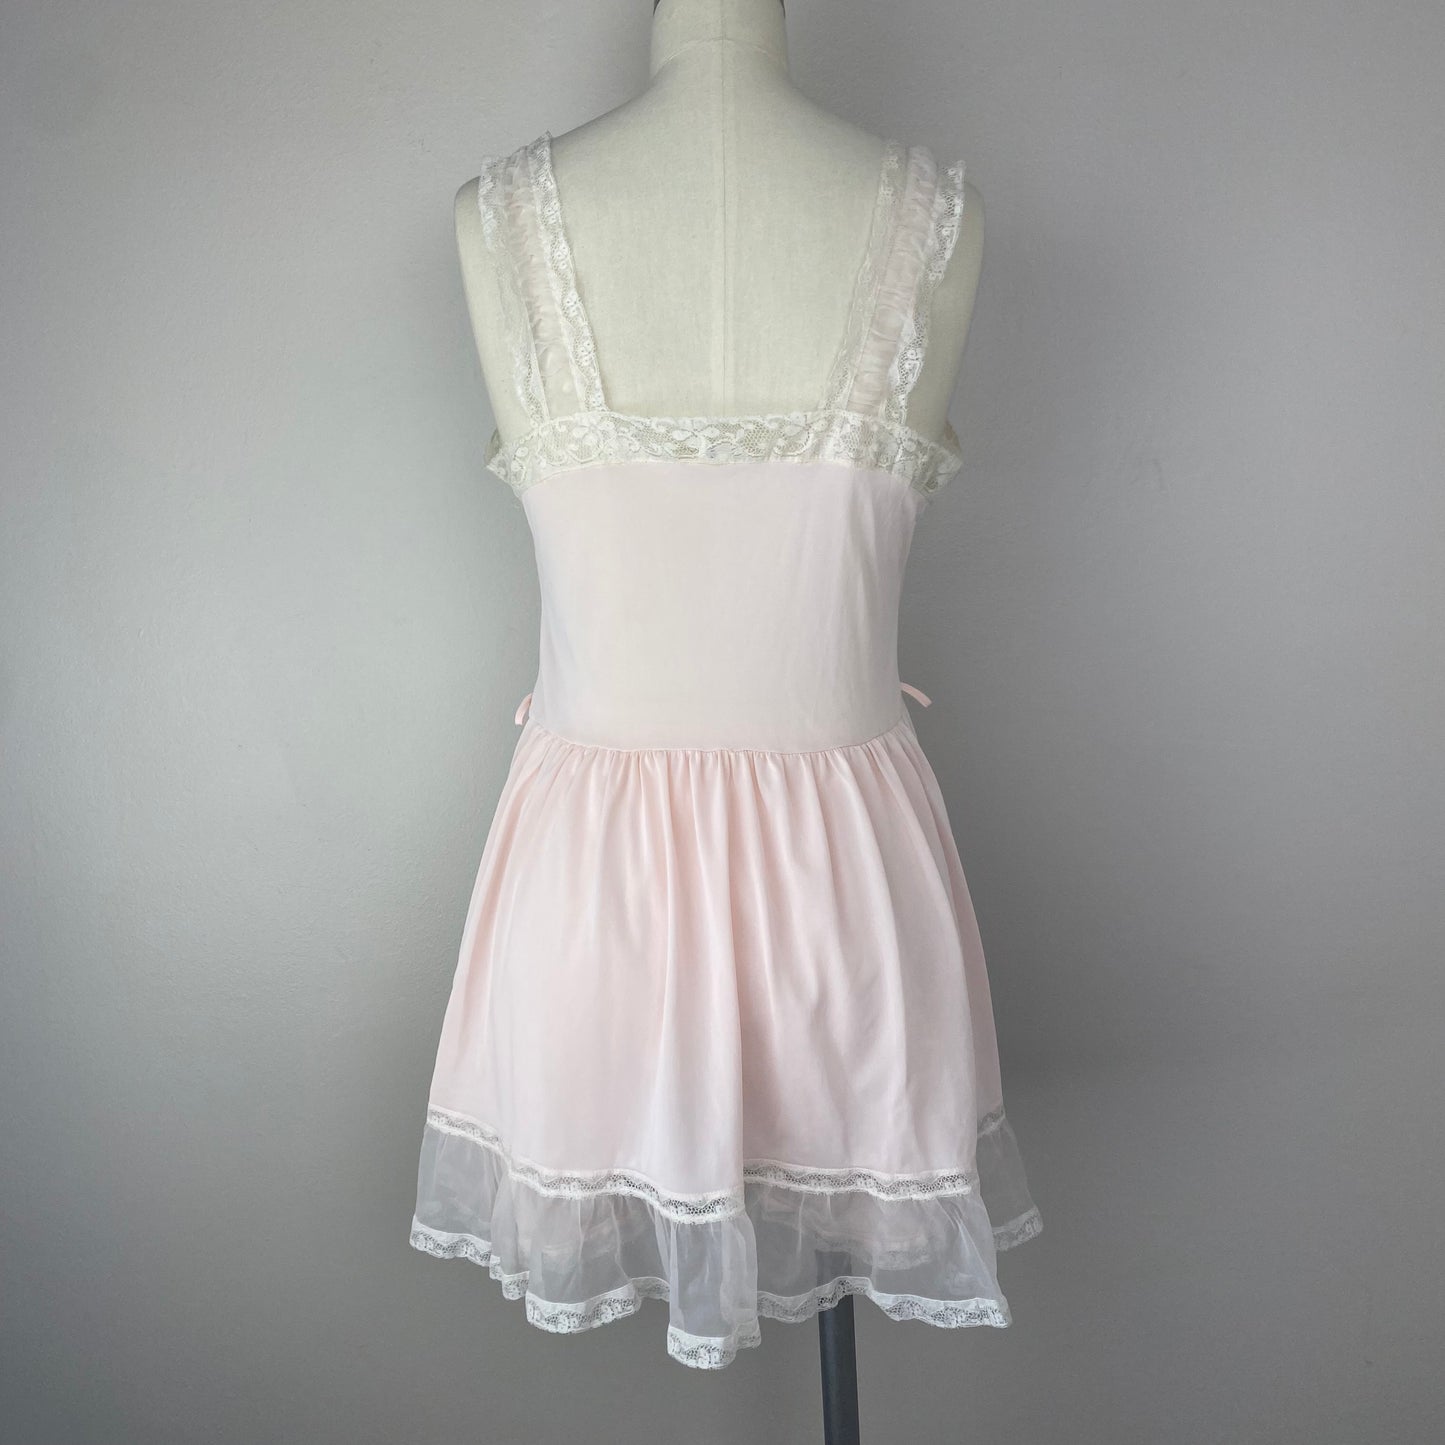 1950s Babydoll Pajama Set, Artemis Size Small, Sleeveless Top and Shorts, Pastel Pink